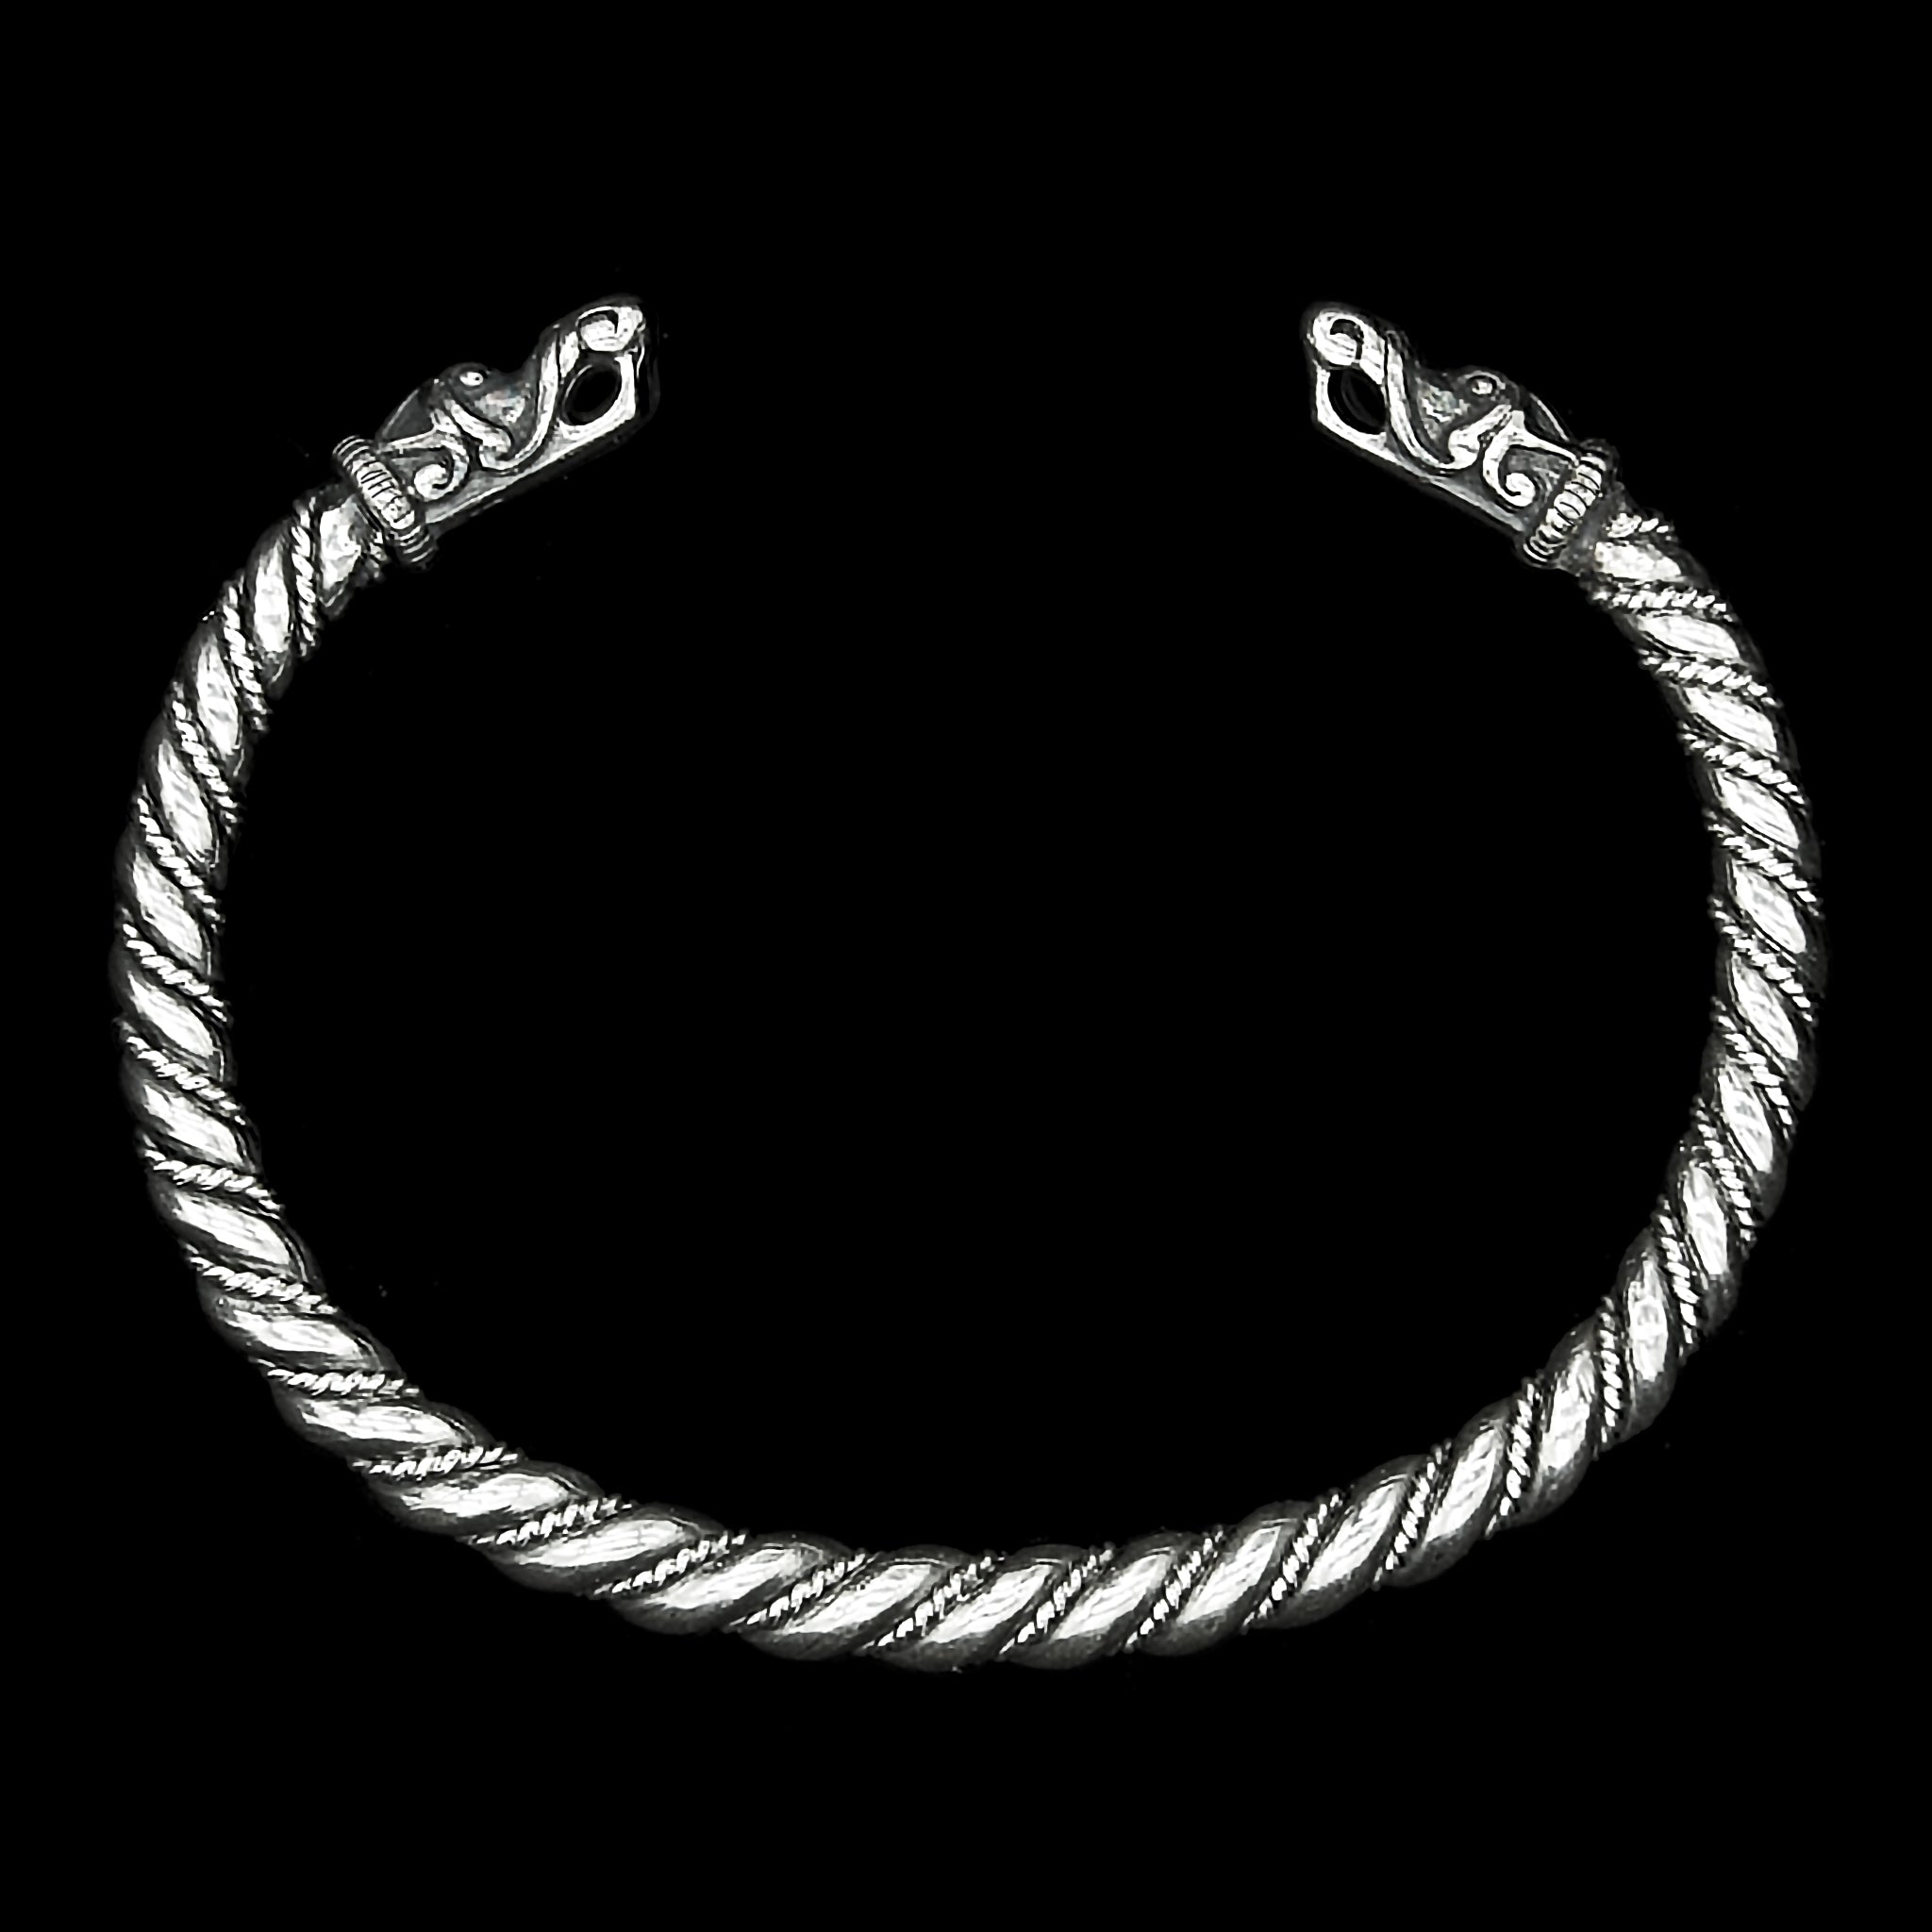 Medium Twisted Silver Bracelet With Gotlandic Dragon Heads